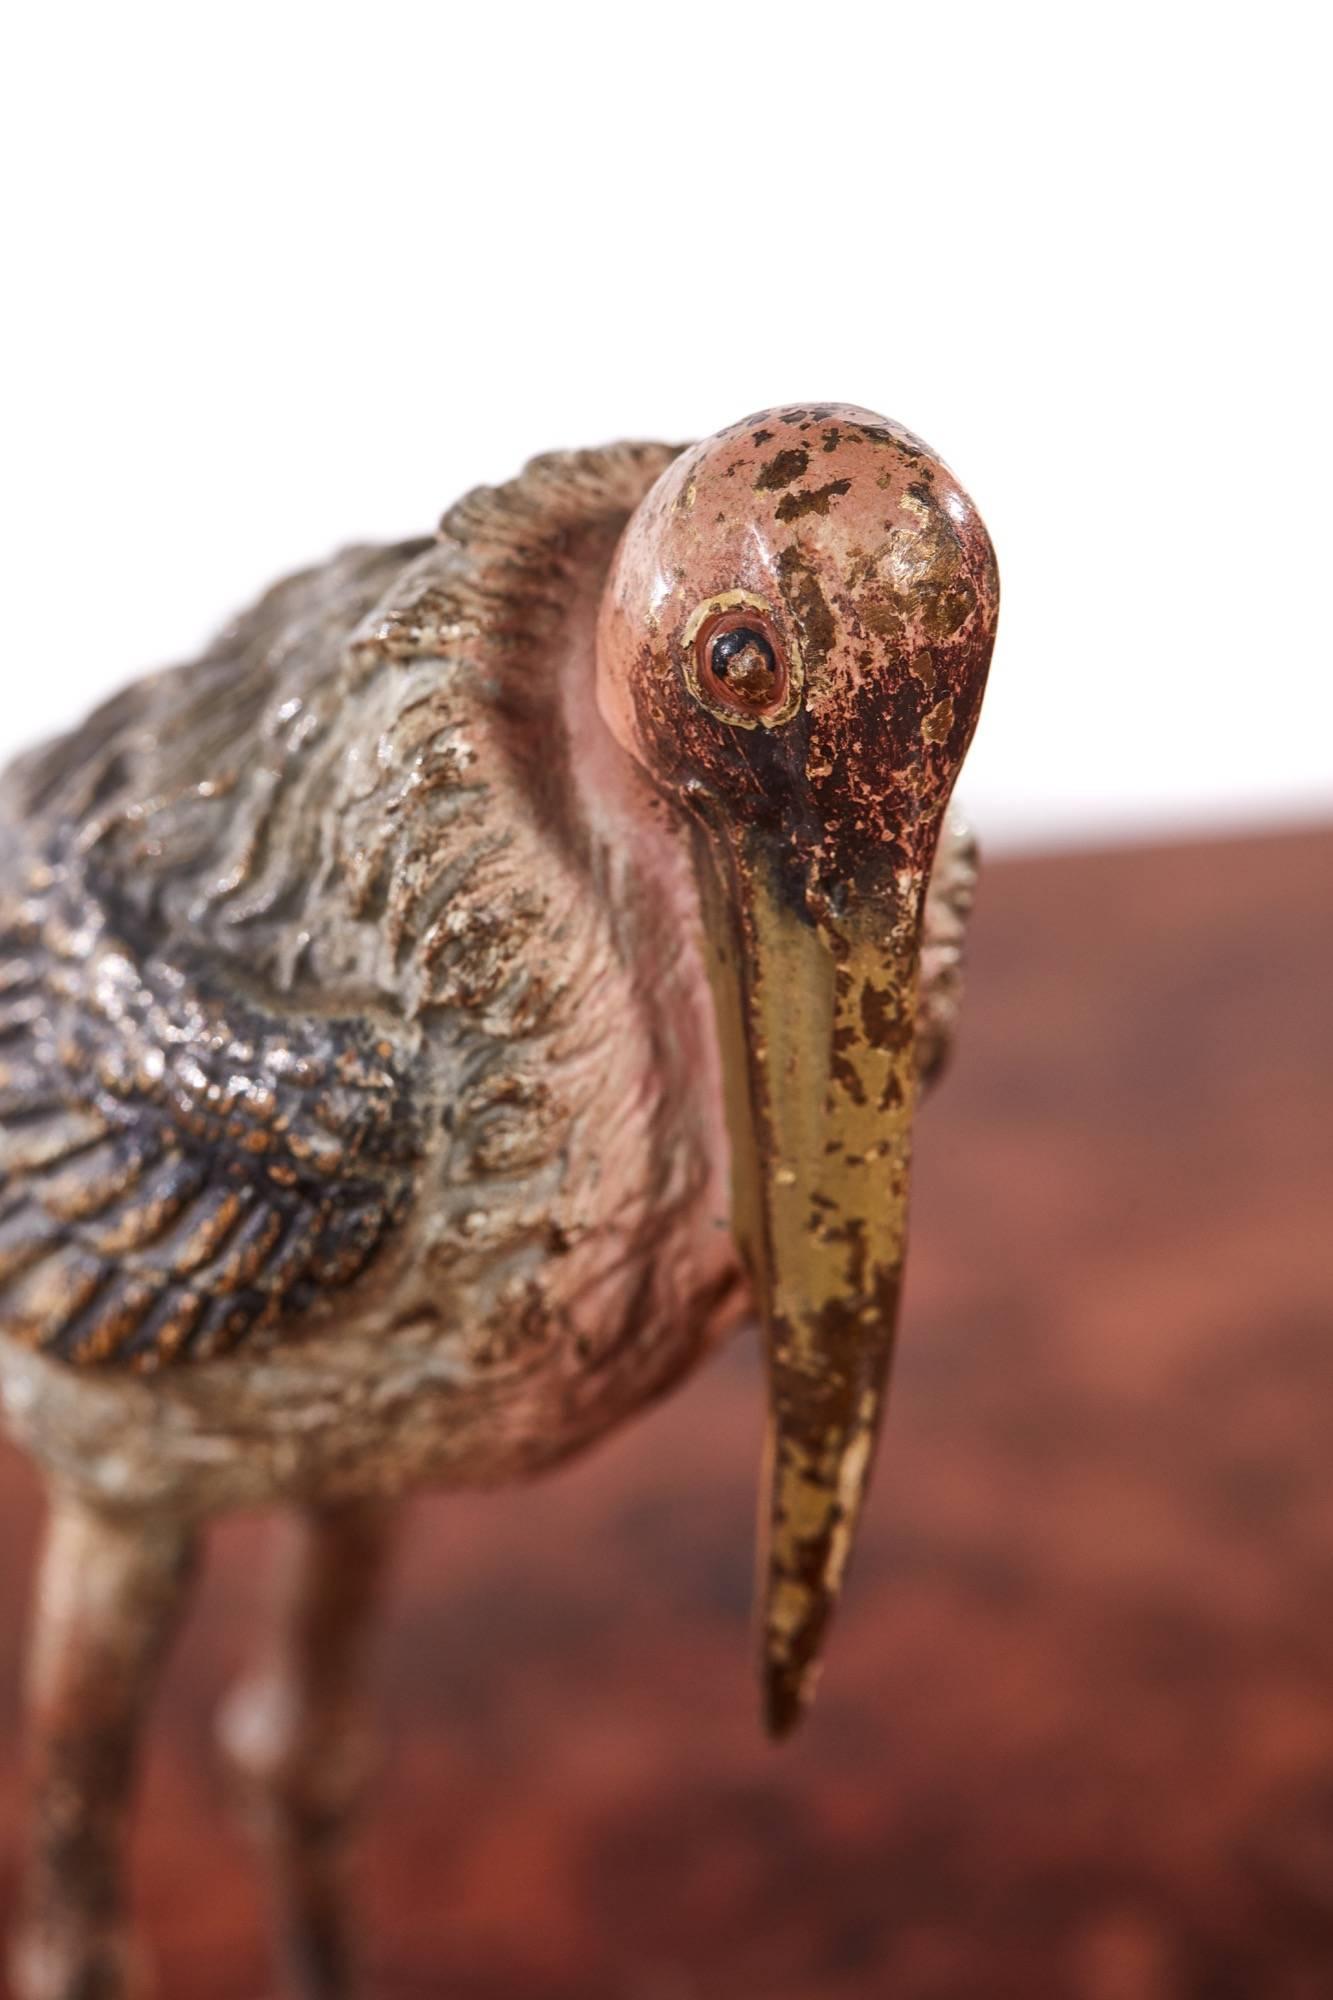 Antique cold painted bronze sculpture of a bird, lovely original color
Measures: 2